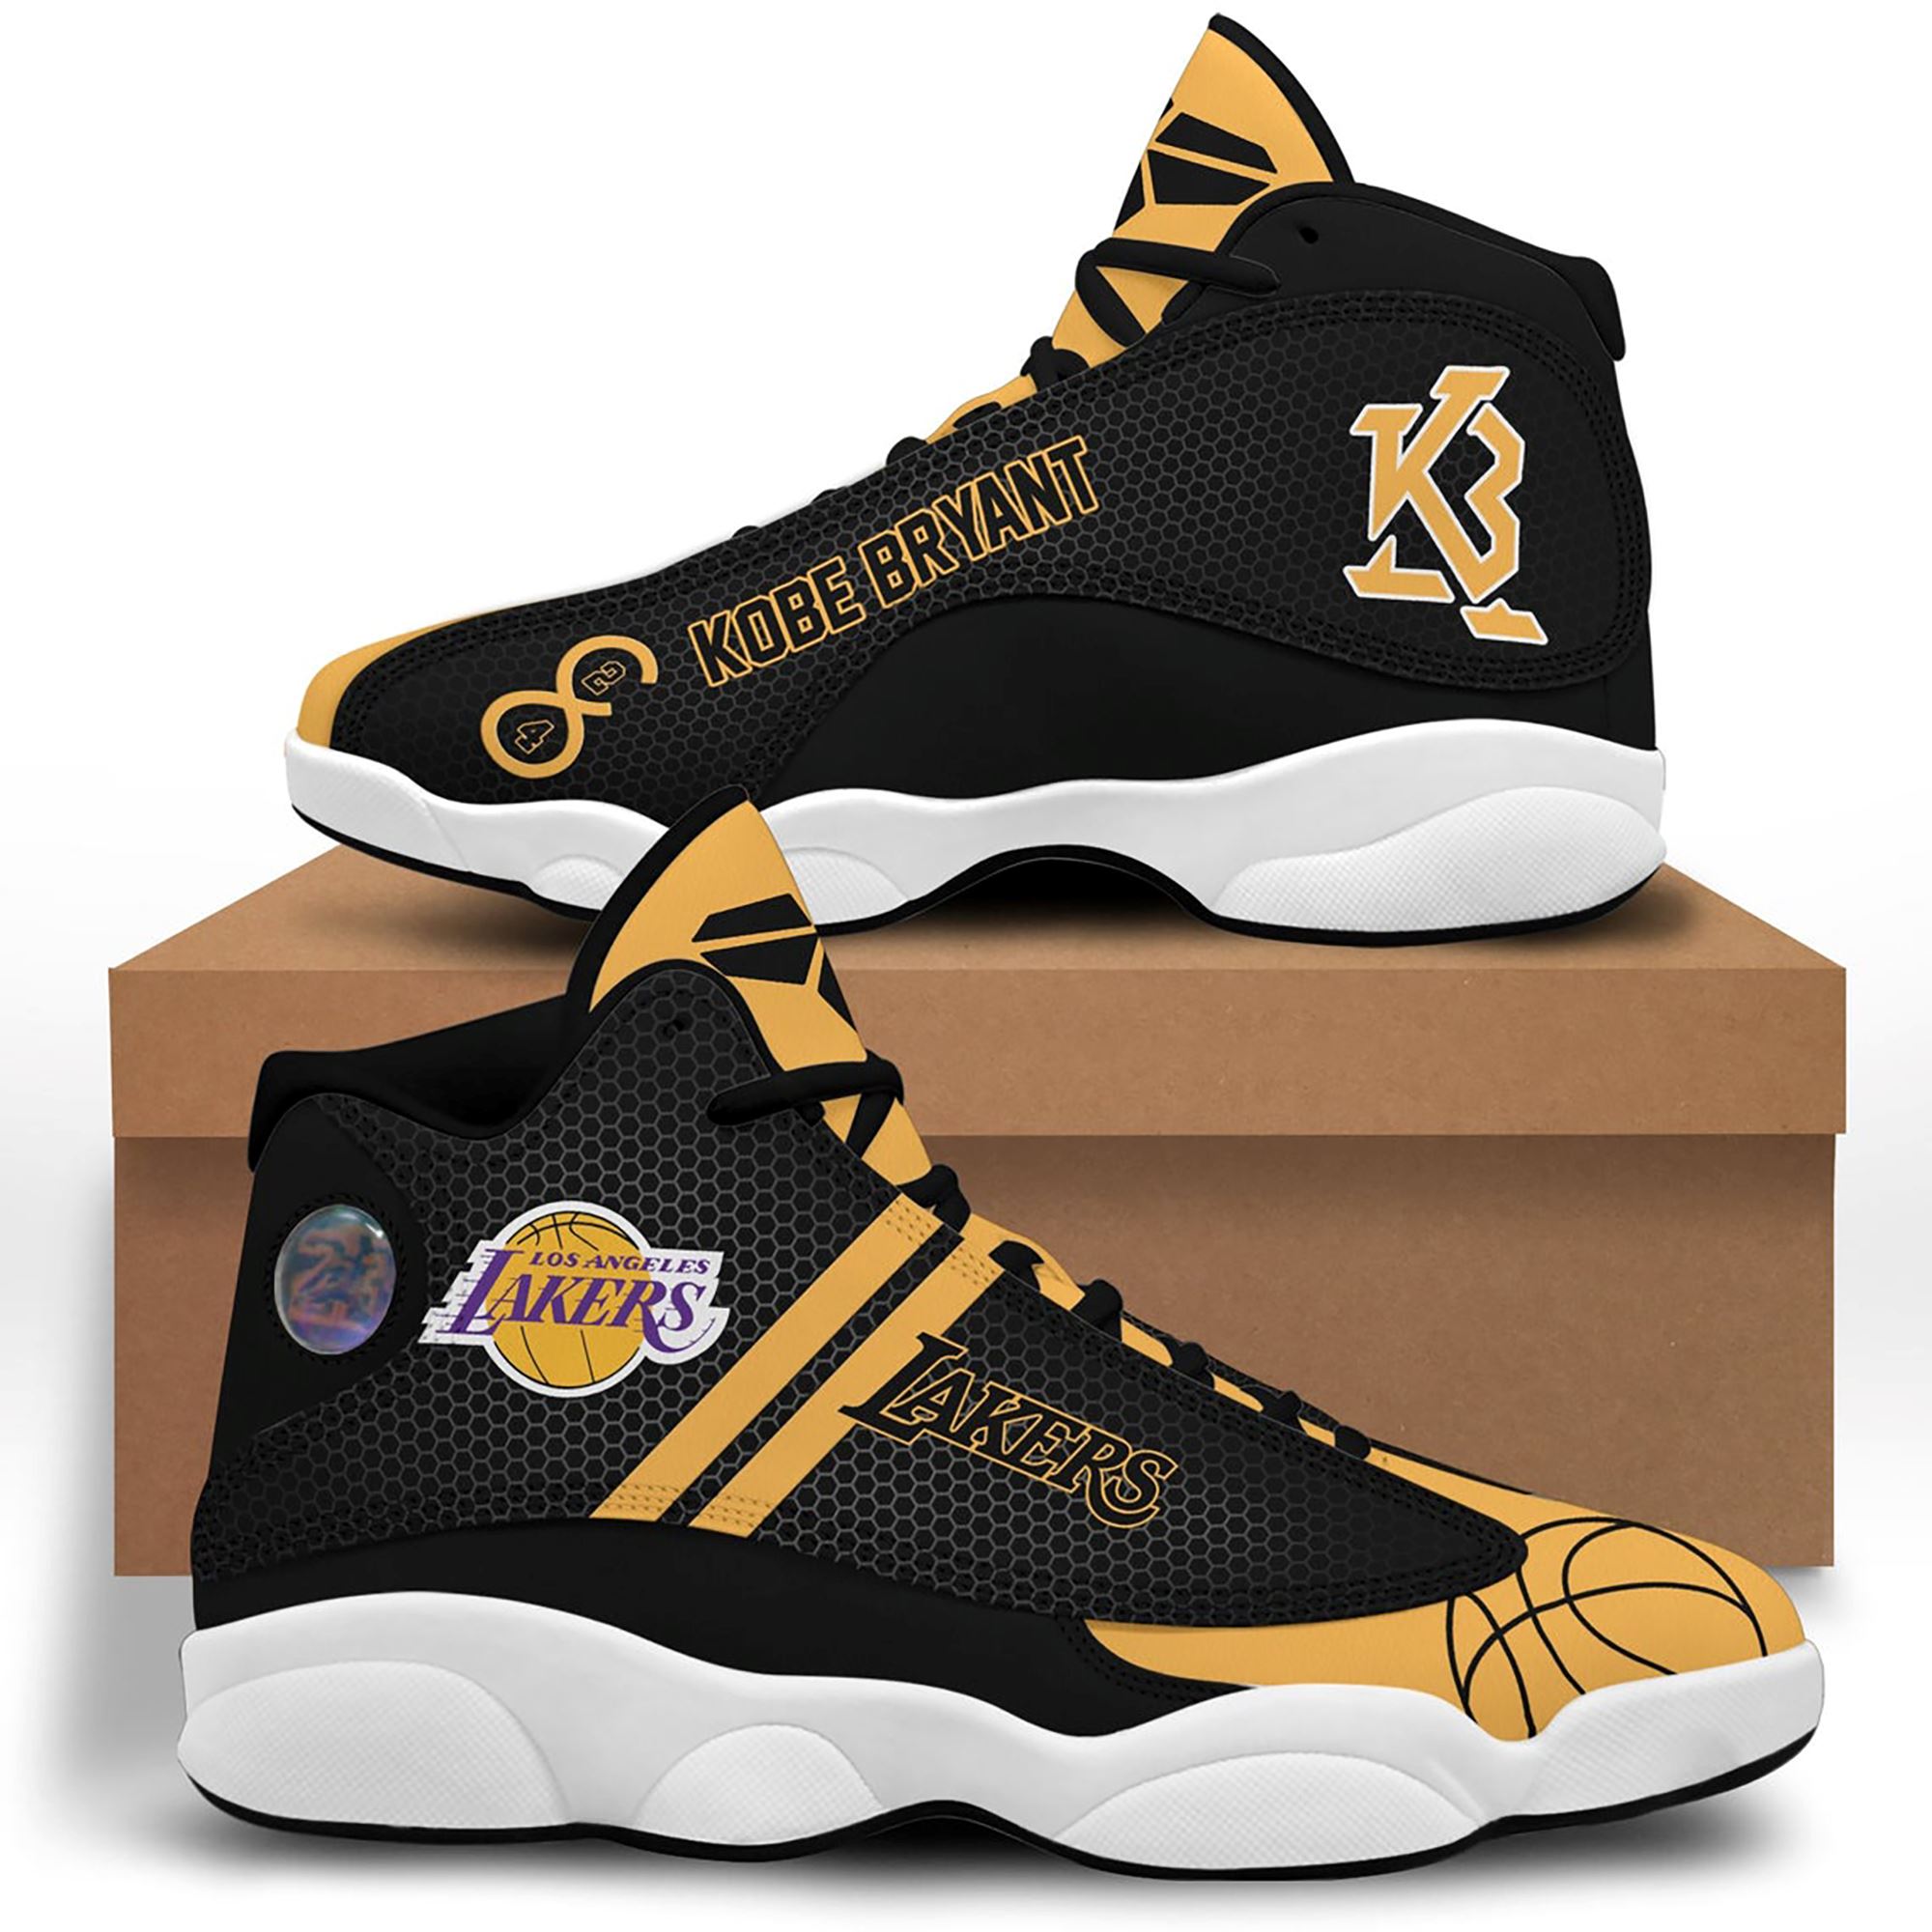 Kobe Bryant Shoes Air Jordan 13 Personalized Shoes Custom Shoes Printed Shoes